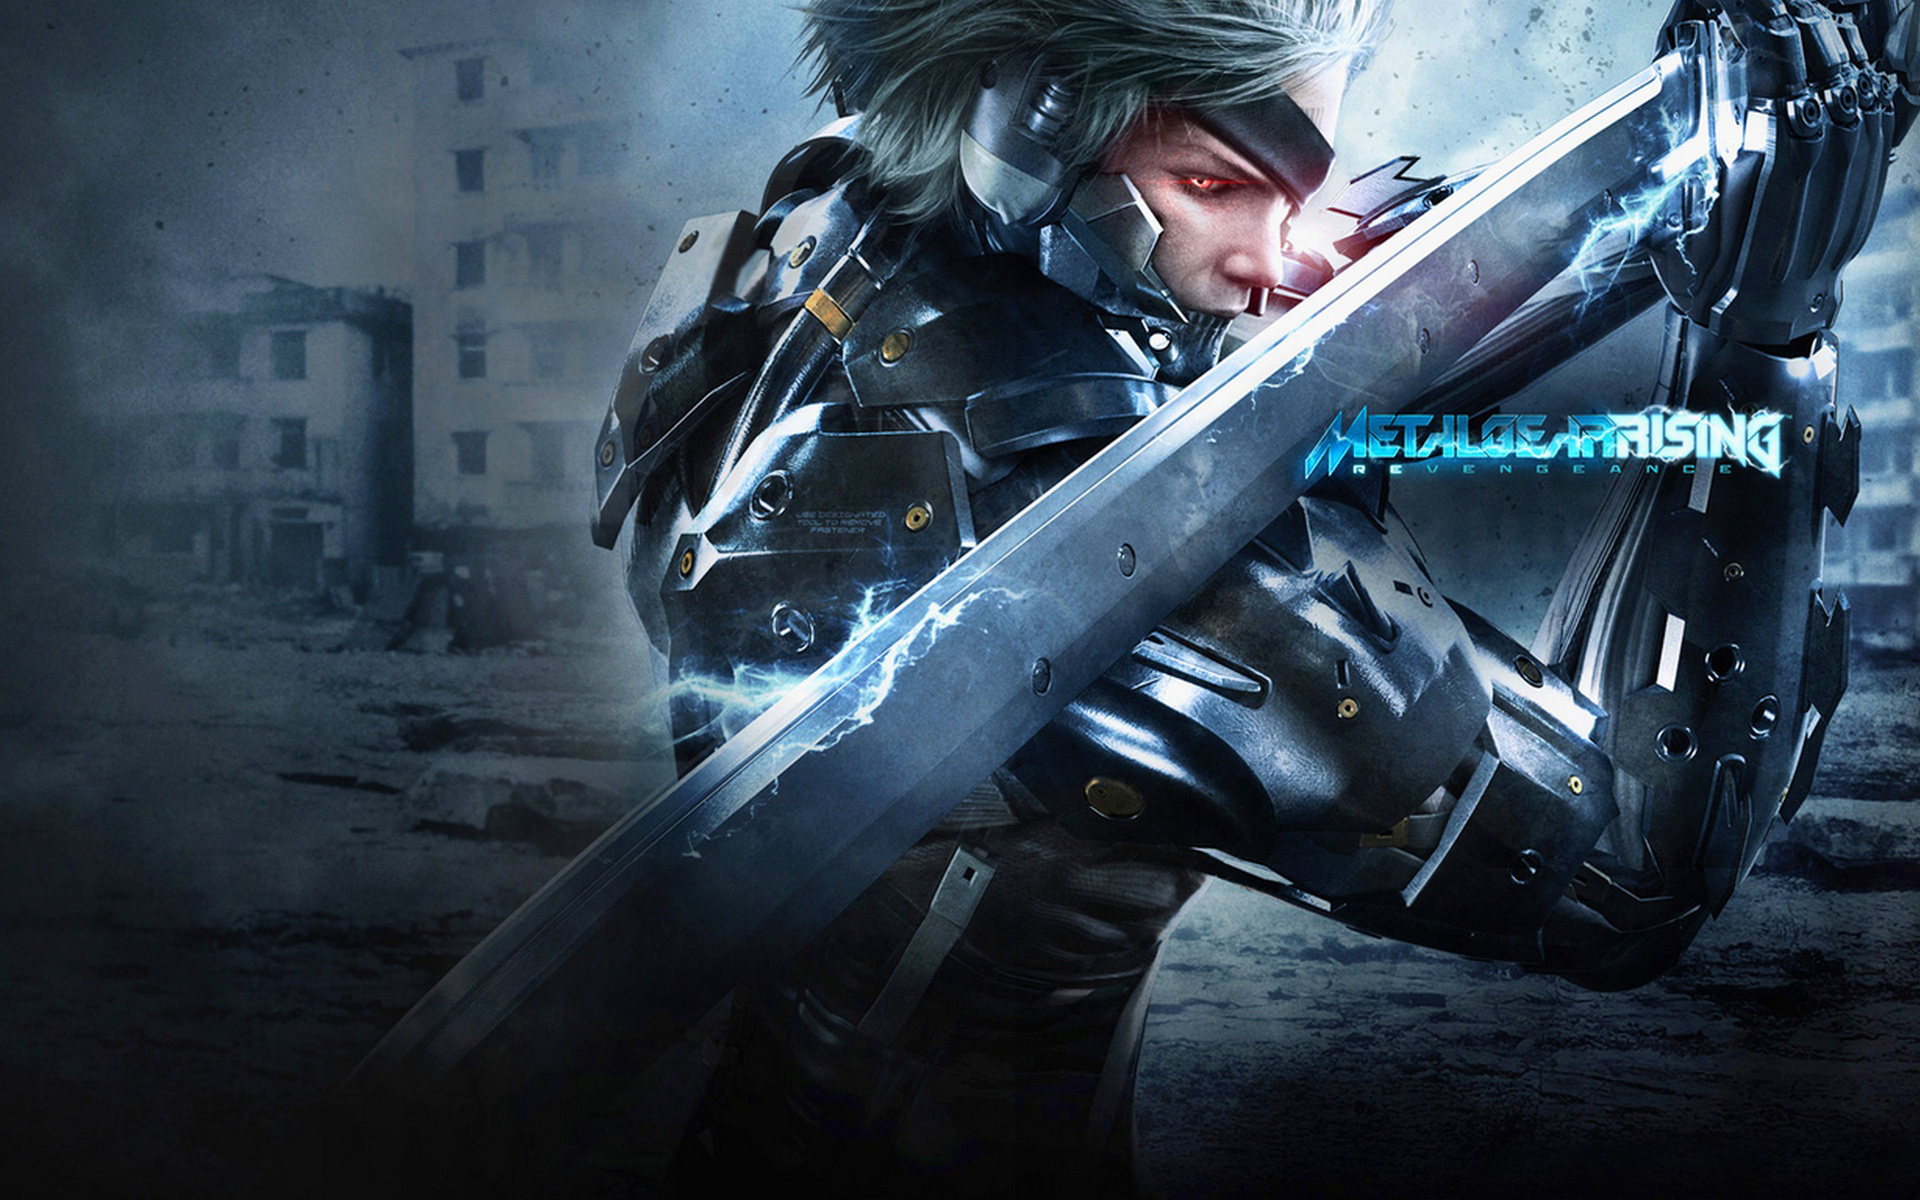 Metal Gear Rising: Revengeance 10th Anniversary Event Scheduled